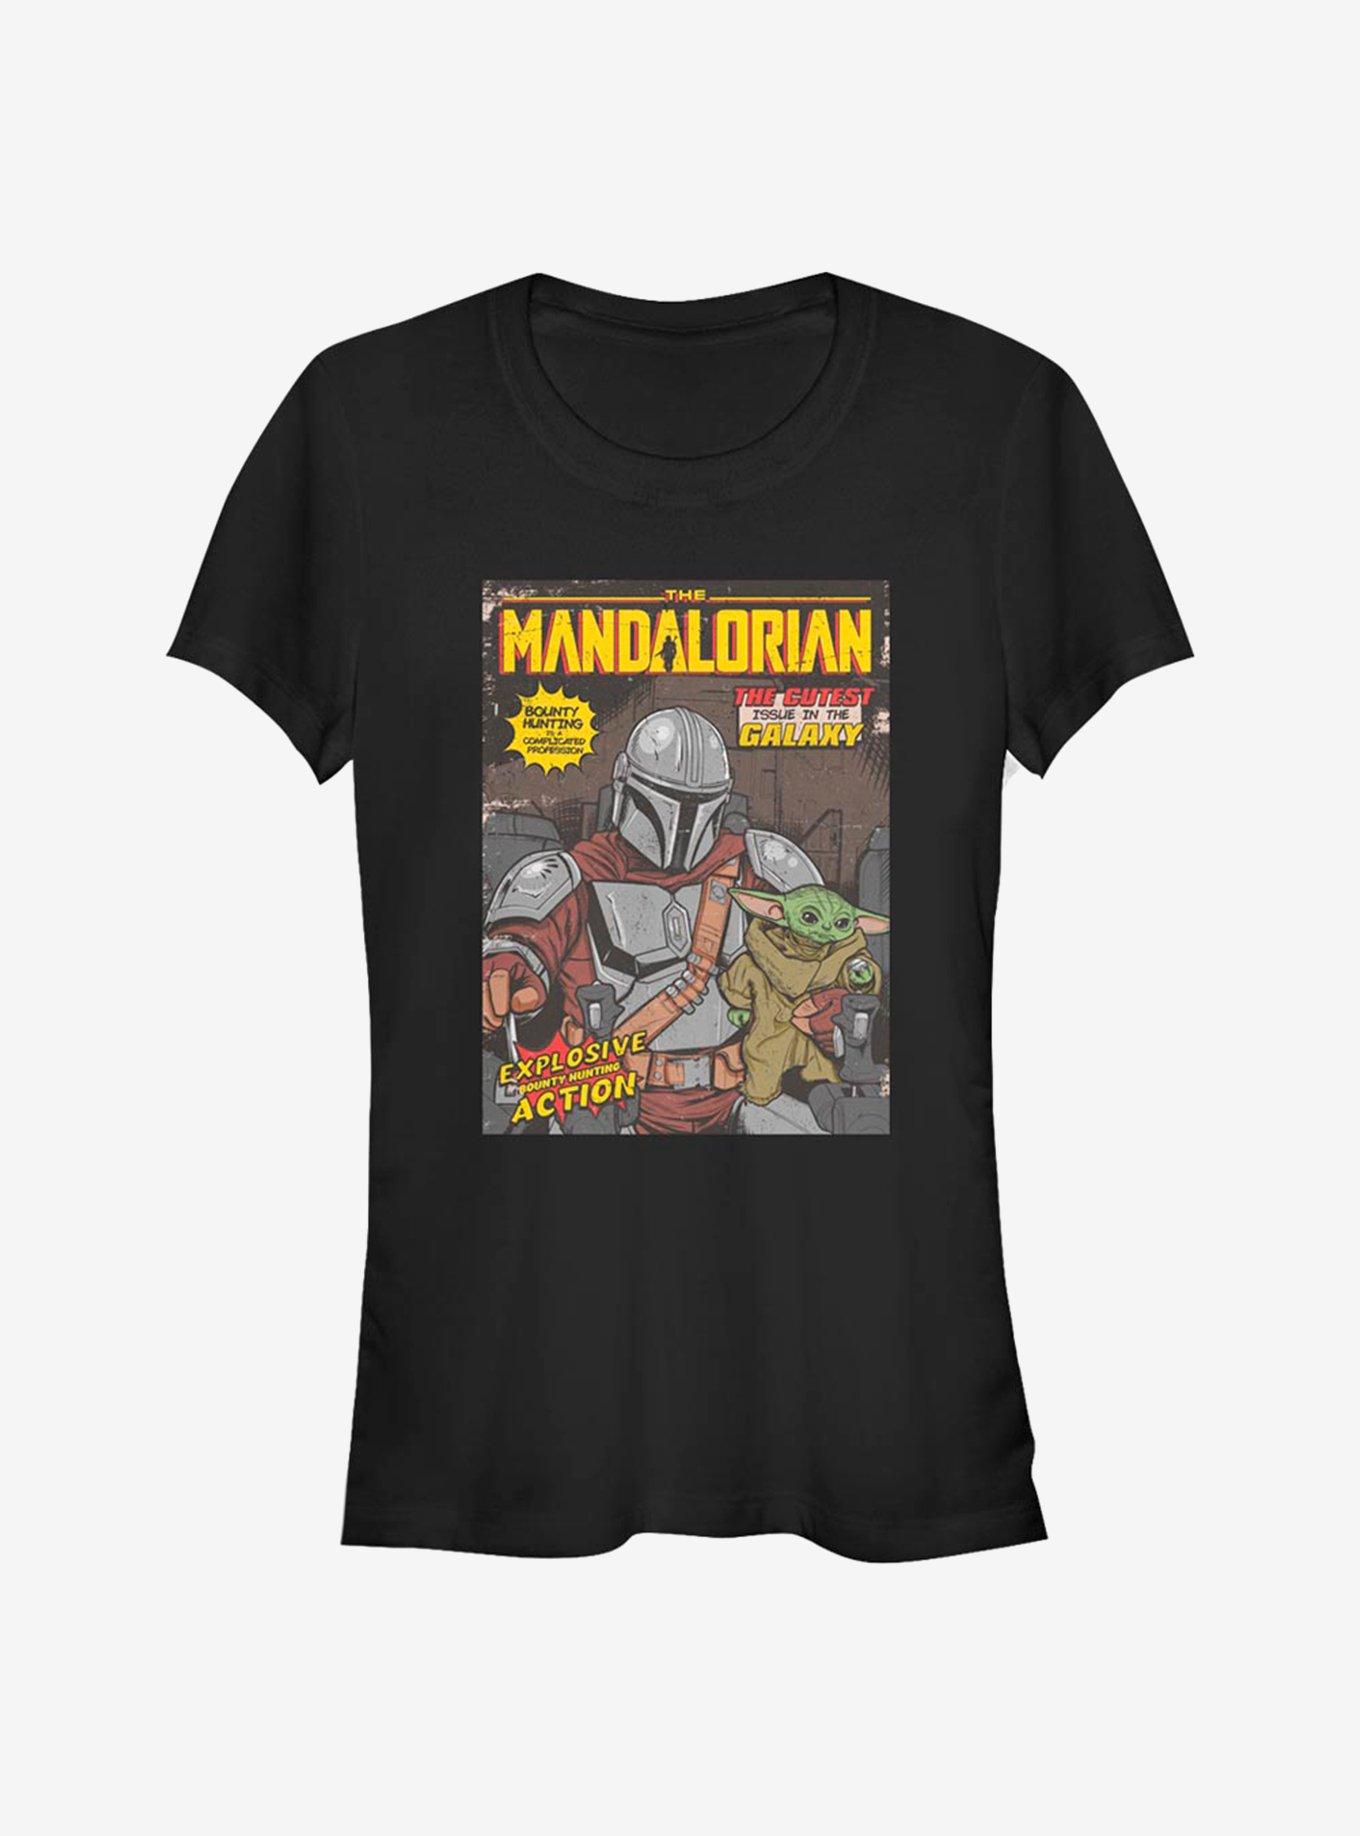 Star Wars The Mandalorian Vintage Comic Cover Girls T-Shirt